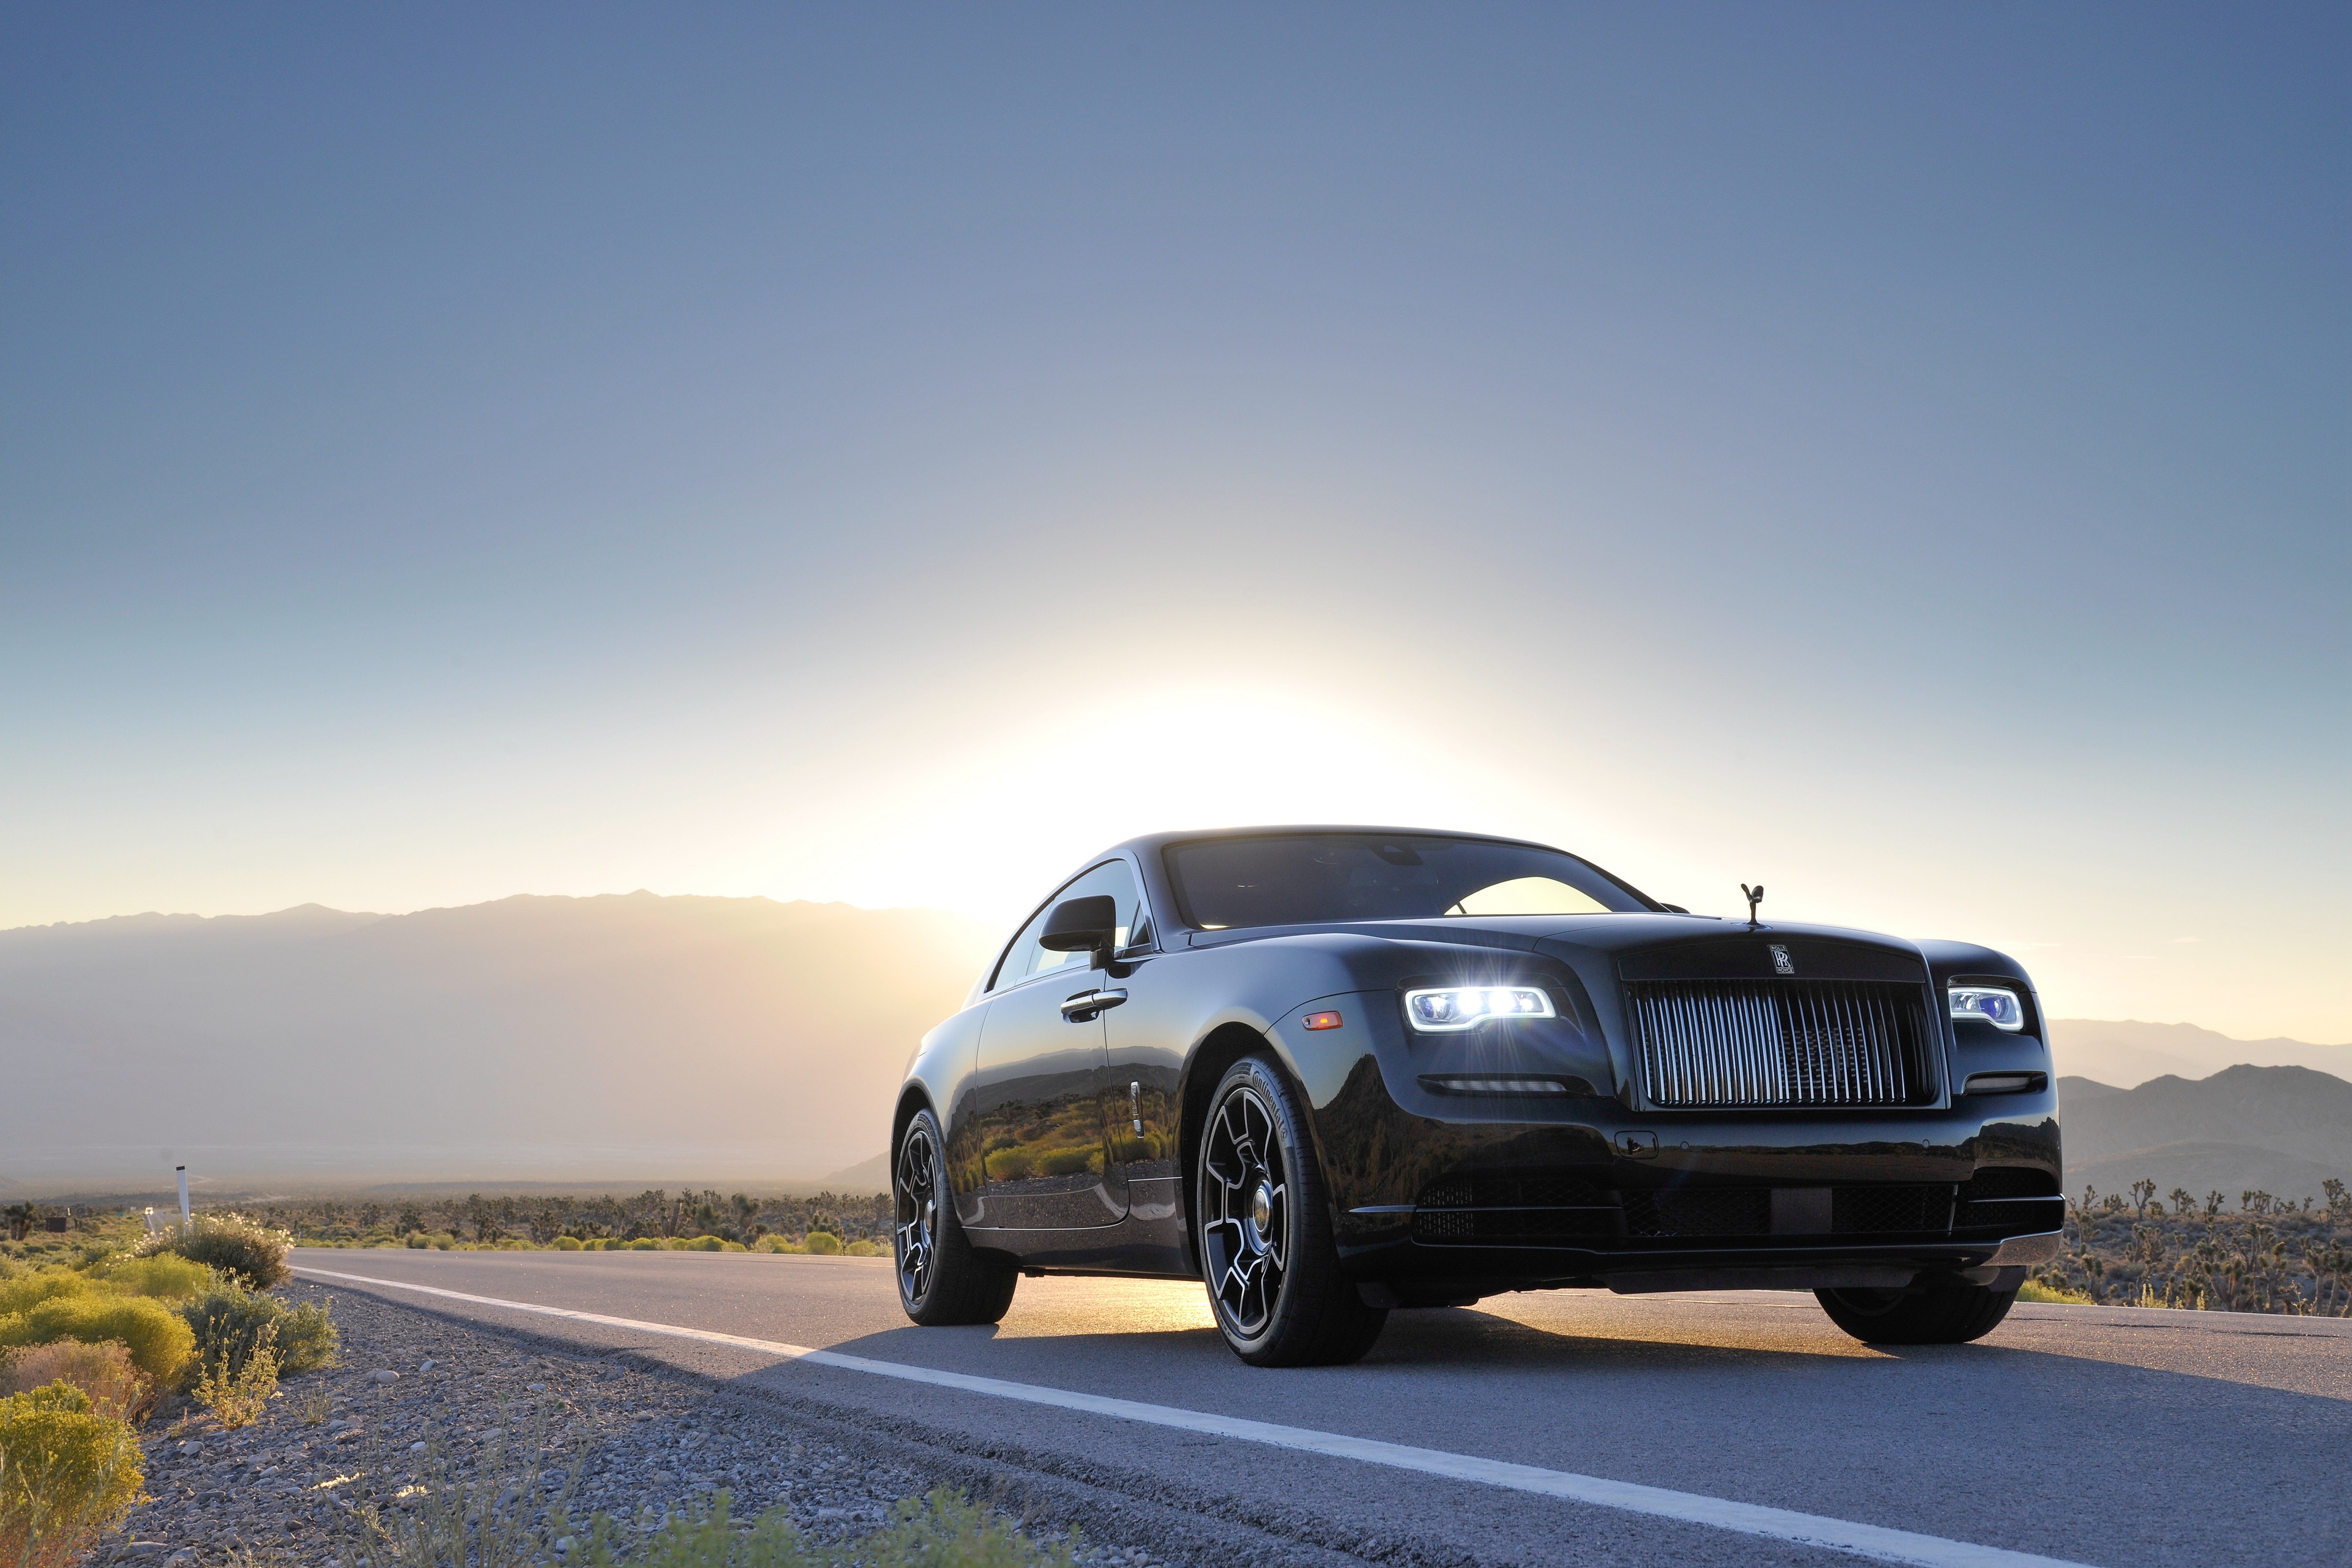 Rolls Royce Wraith 4k Ultra HD Wallpaper Background Image